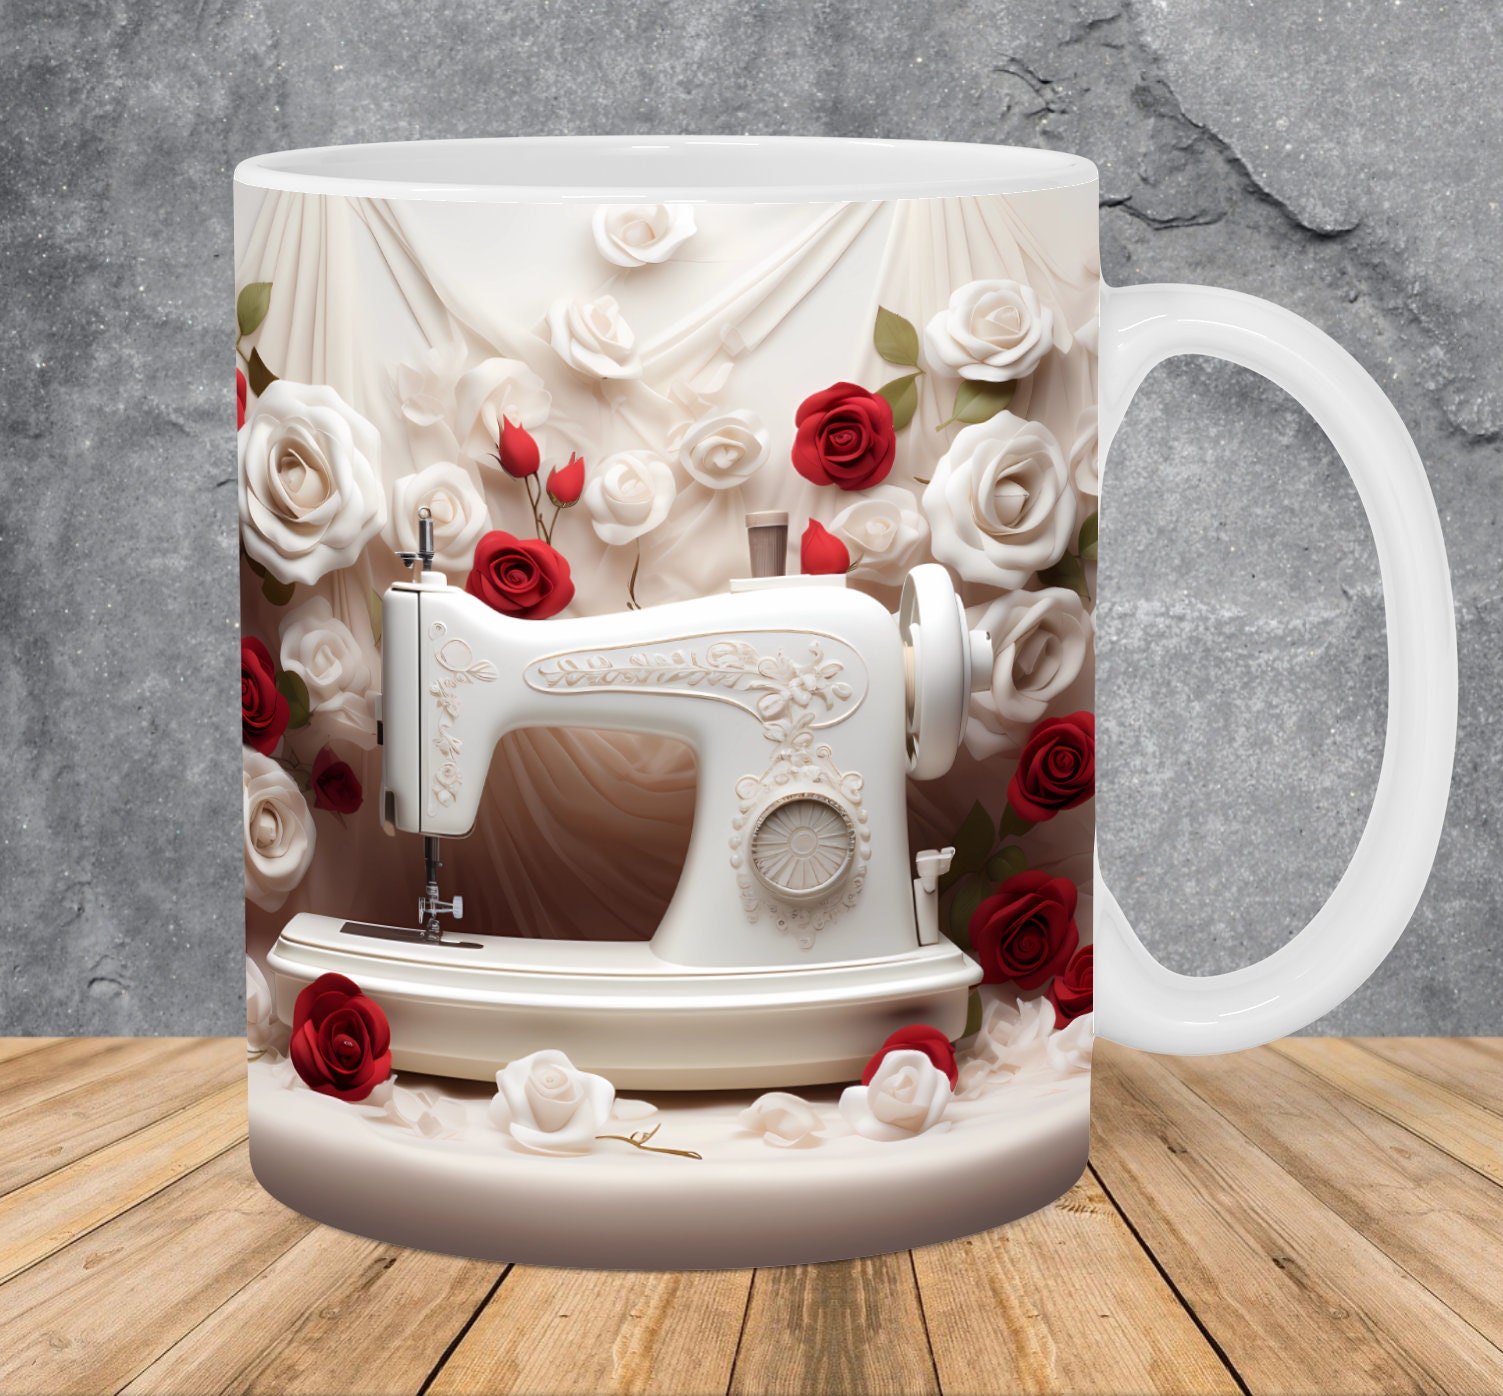 3D Sewing Machine Mug Ceramic Coffee Mug Creative Funny Space Design Tea  Mug Birthday Christmas Gifts